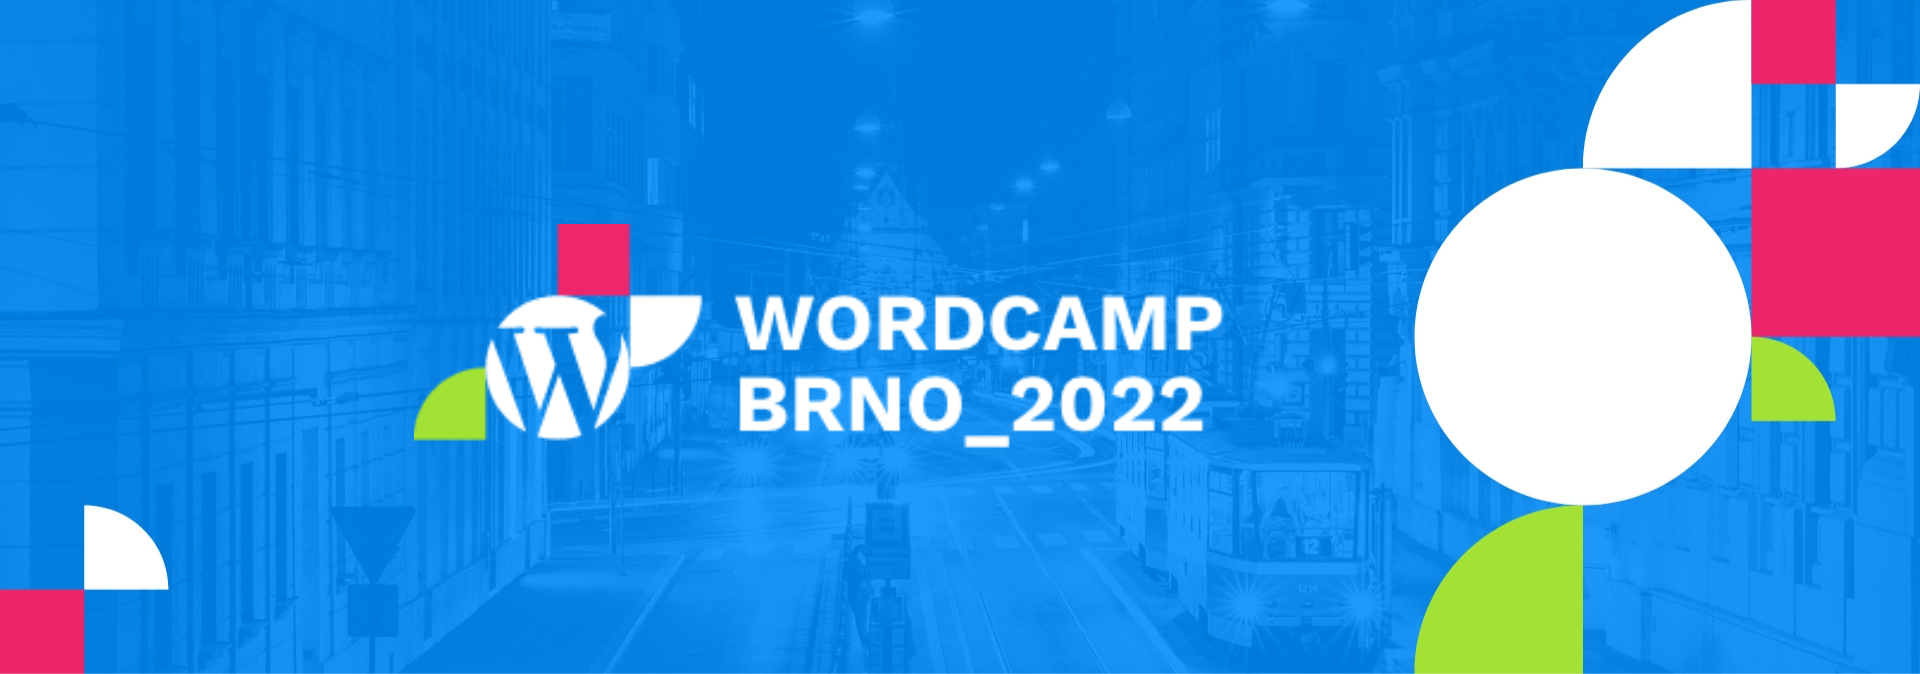 WordCamp Brno - SEO